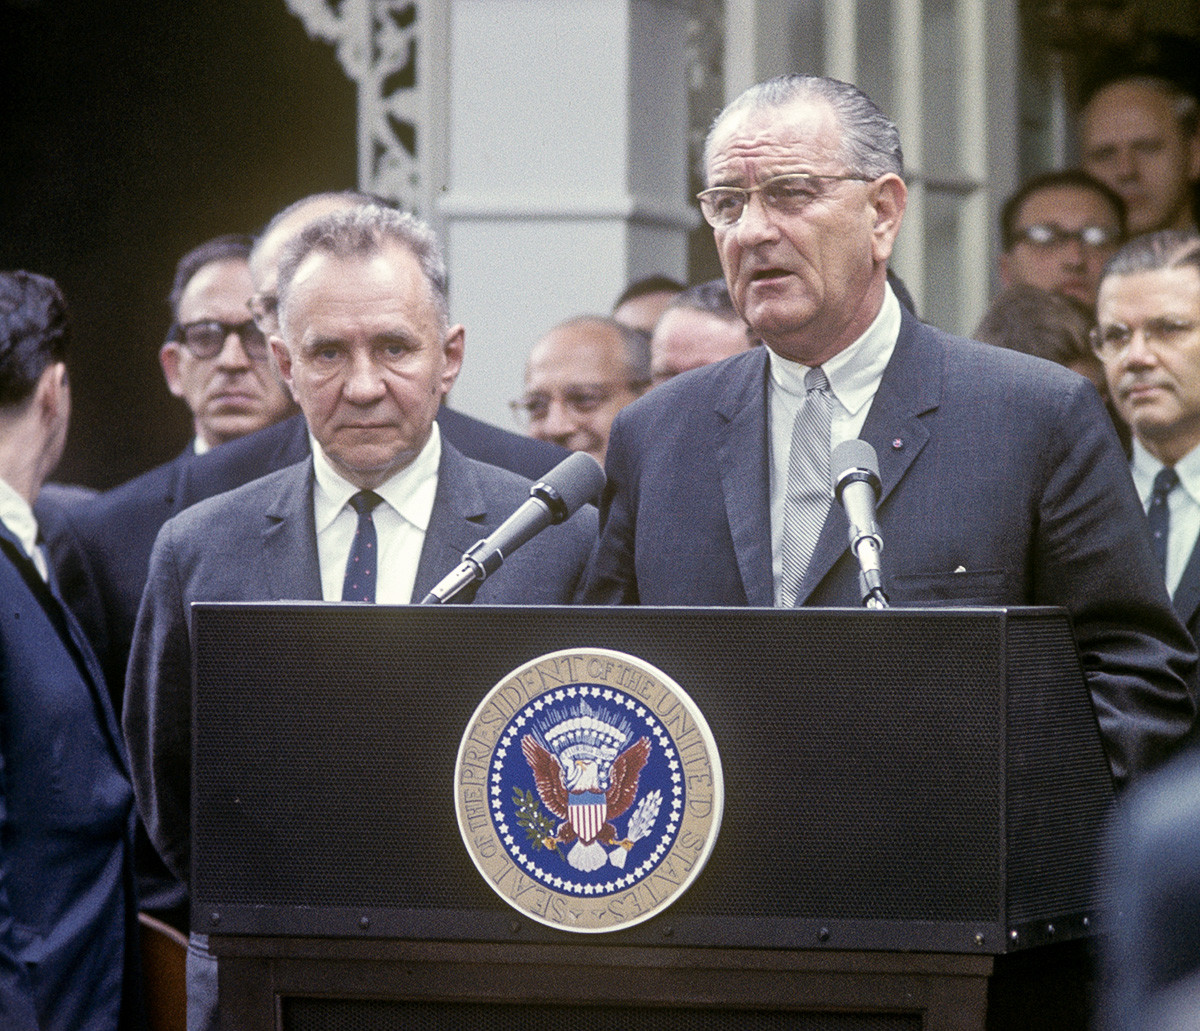 Alexei Kosygin and President Lyndon Johnson speaking at the podium at Glassboro Summit, Glassboro, NJ, June 1967